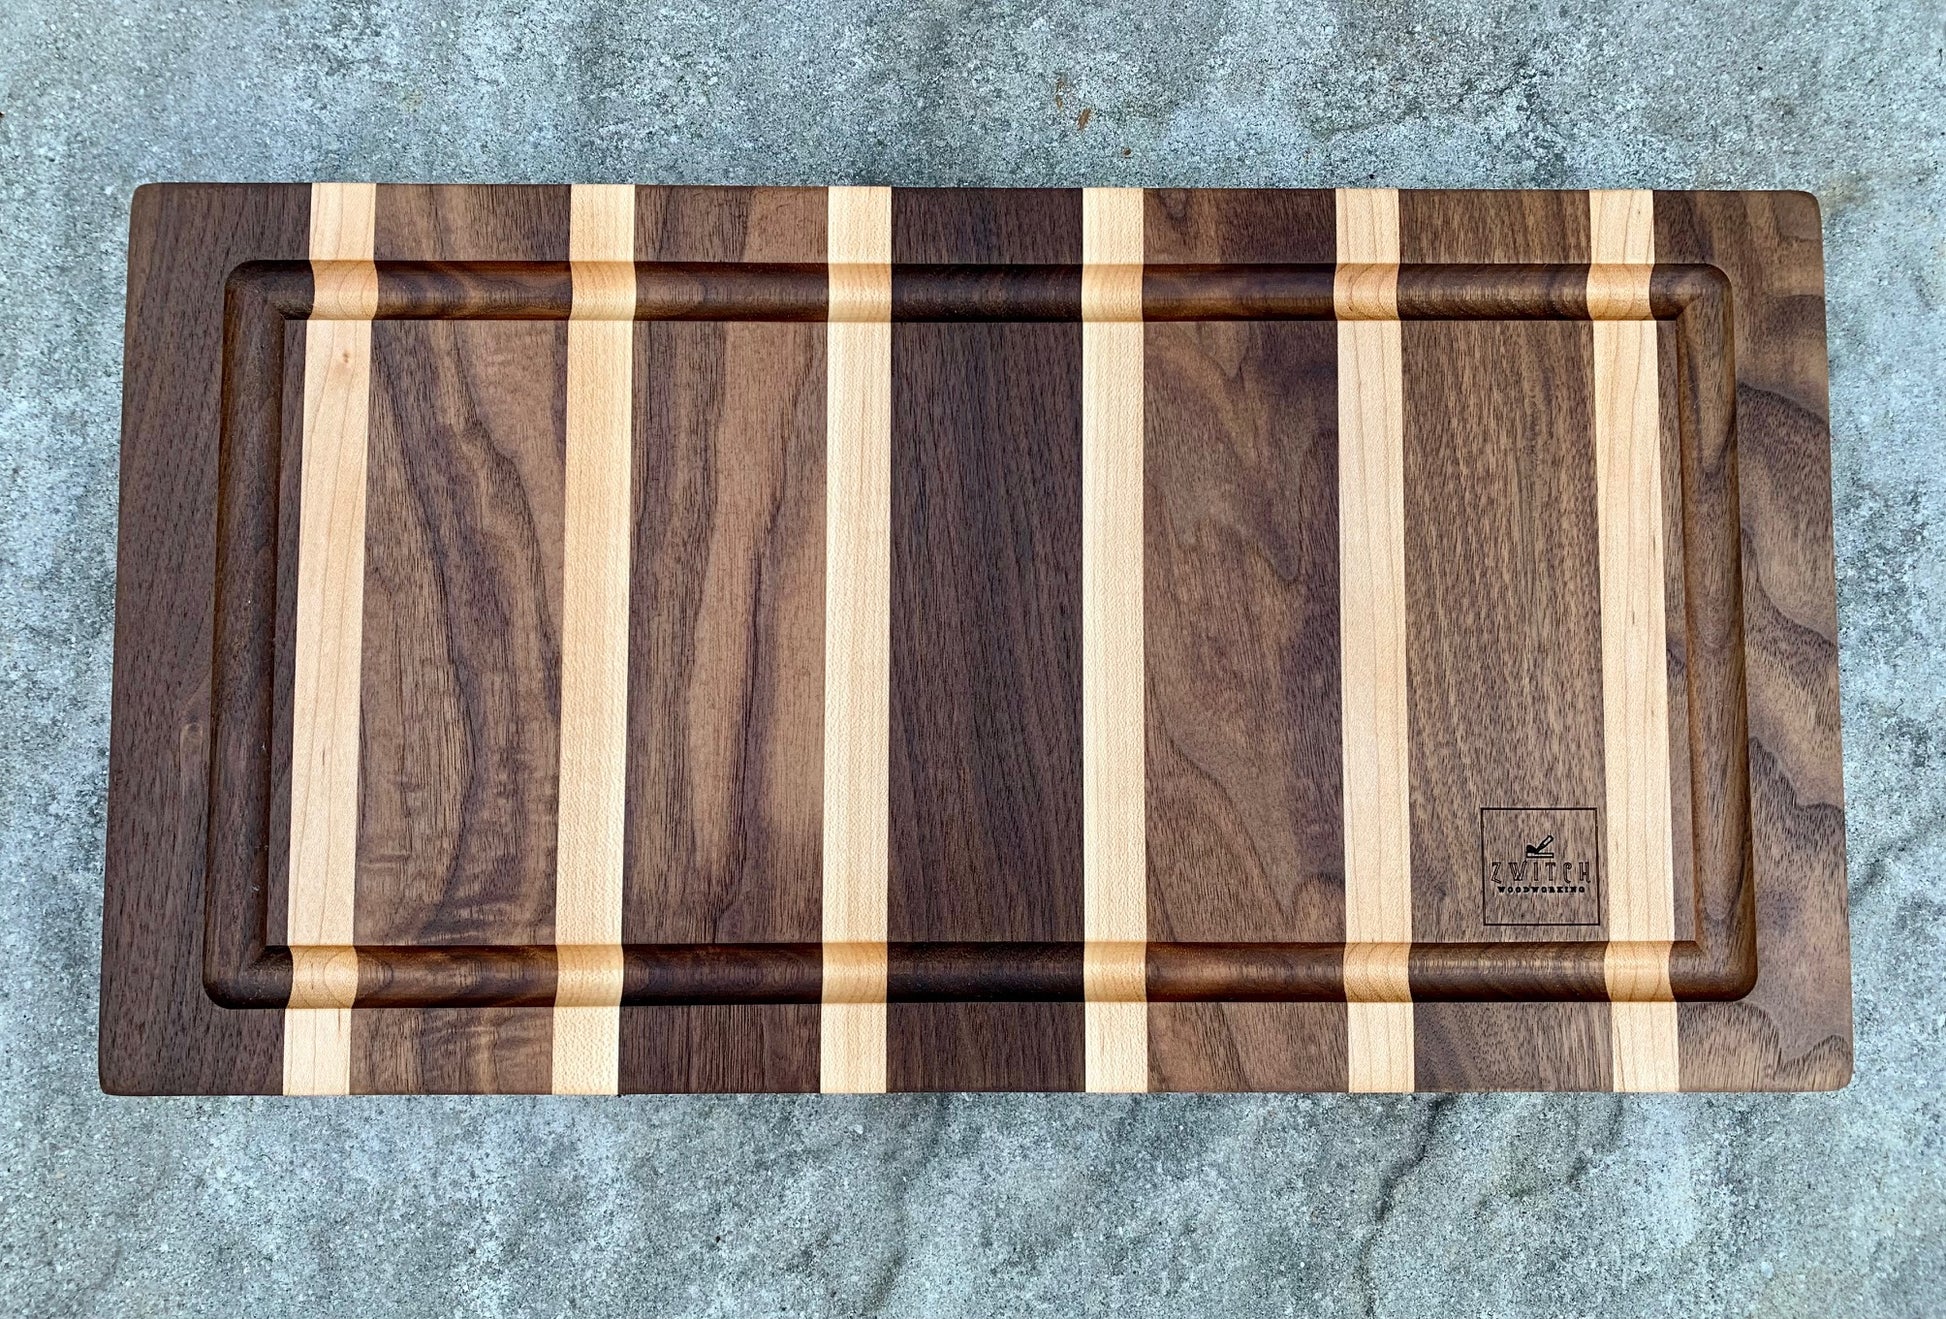 Striped Cutting Board - Walnut and Maple